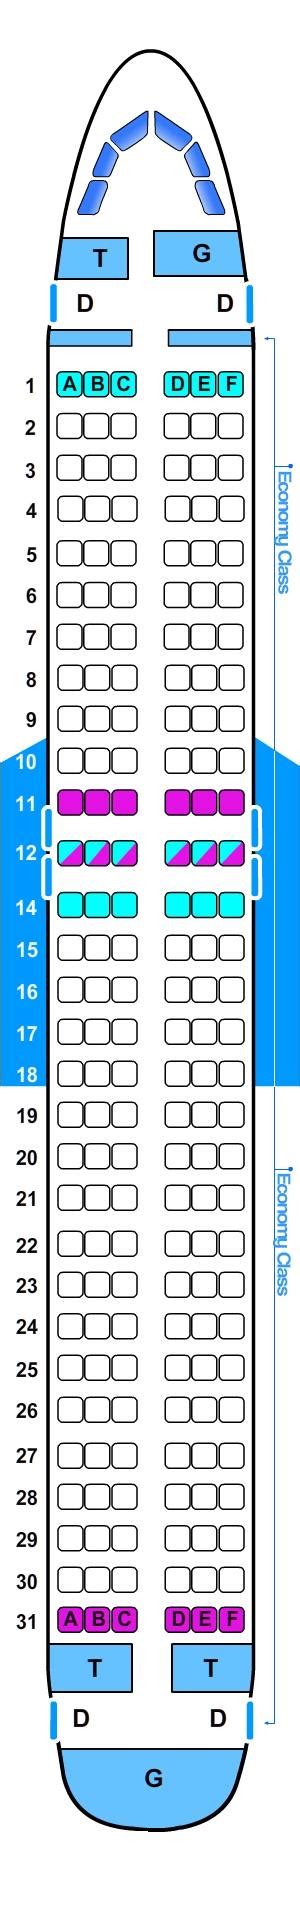 seating chart  airbus